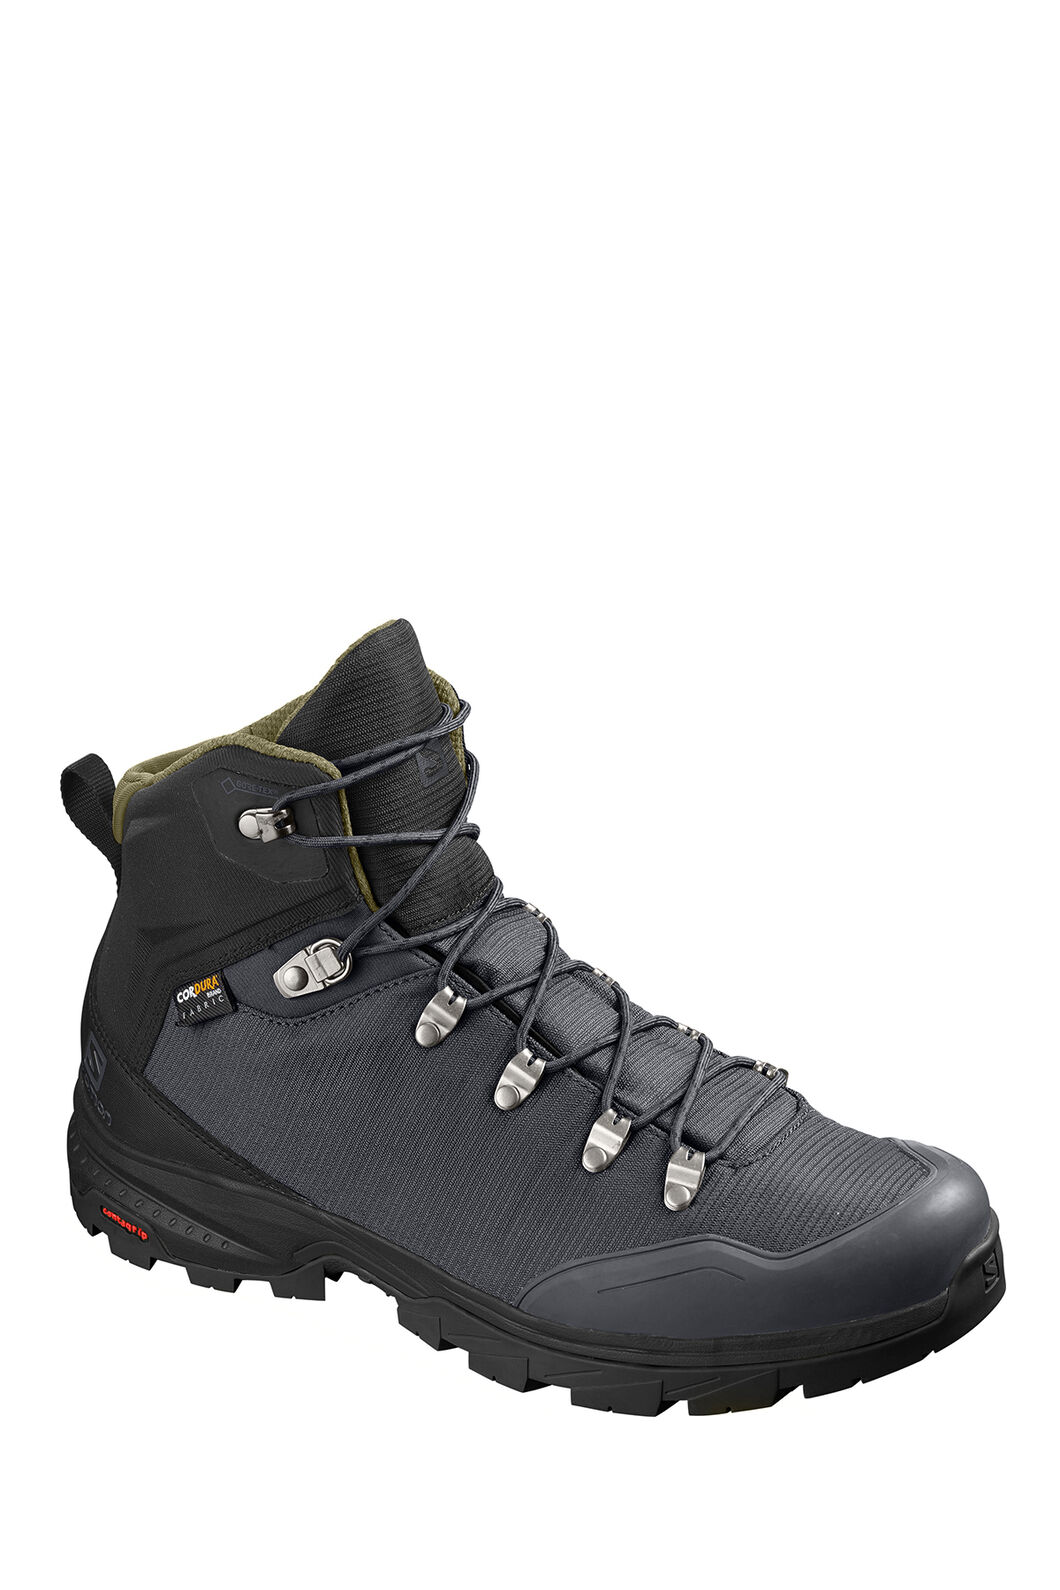 Salomon Outback 500 GTX Hiking Boots — Men's